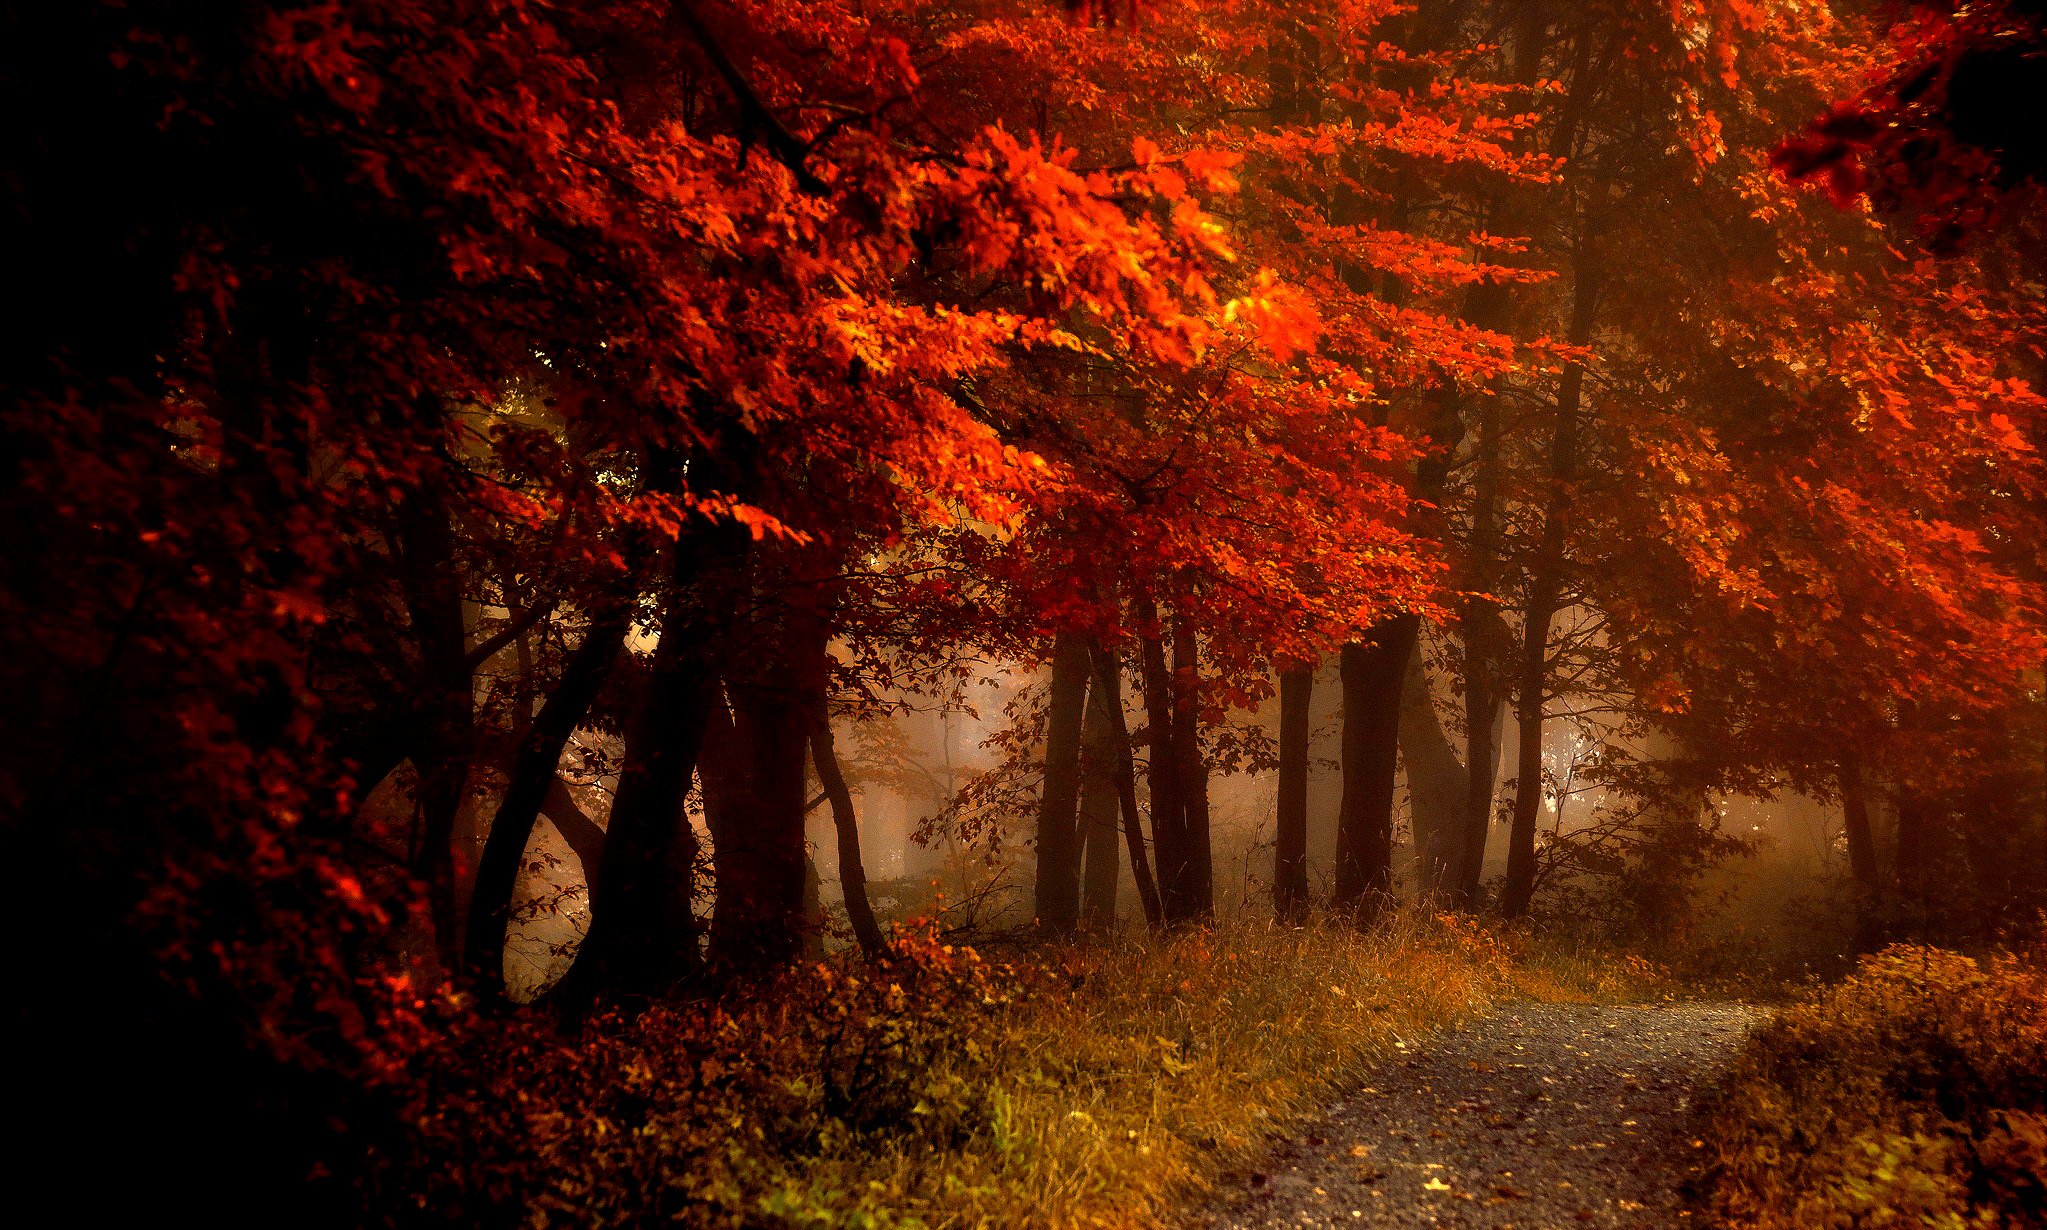 Fall Splendor Autumn Leaves Bench Nature Forest Path Autumn Splendor Woods Road